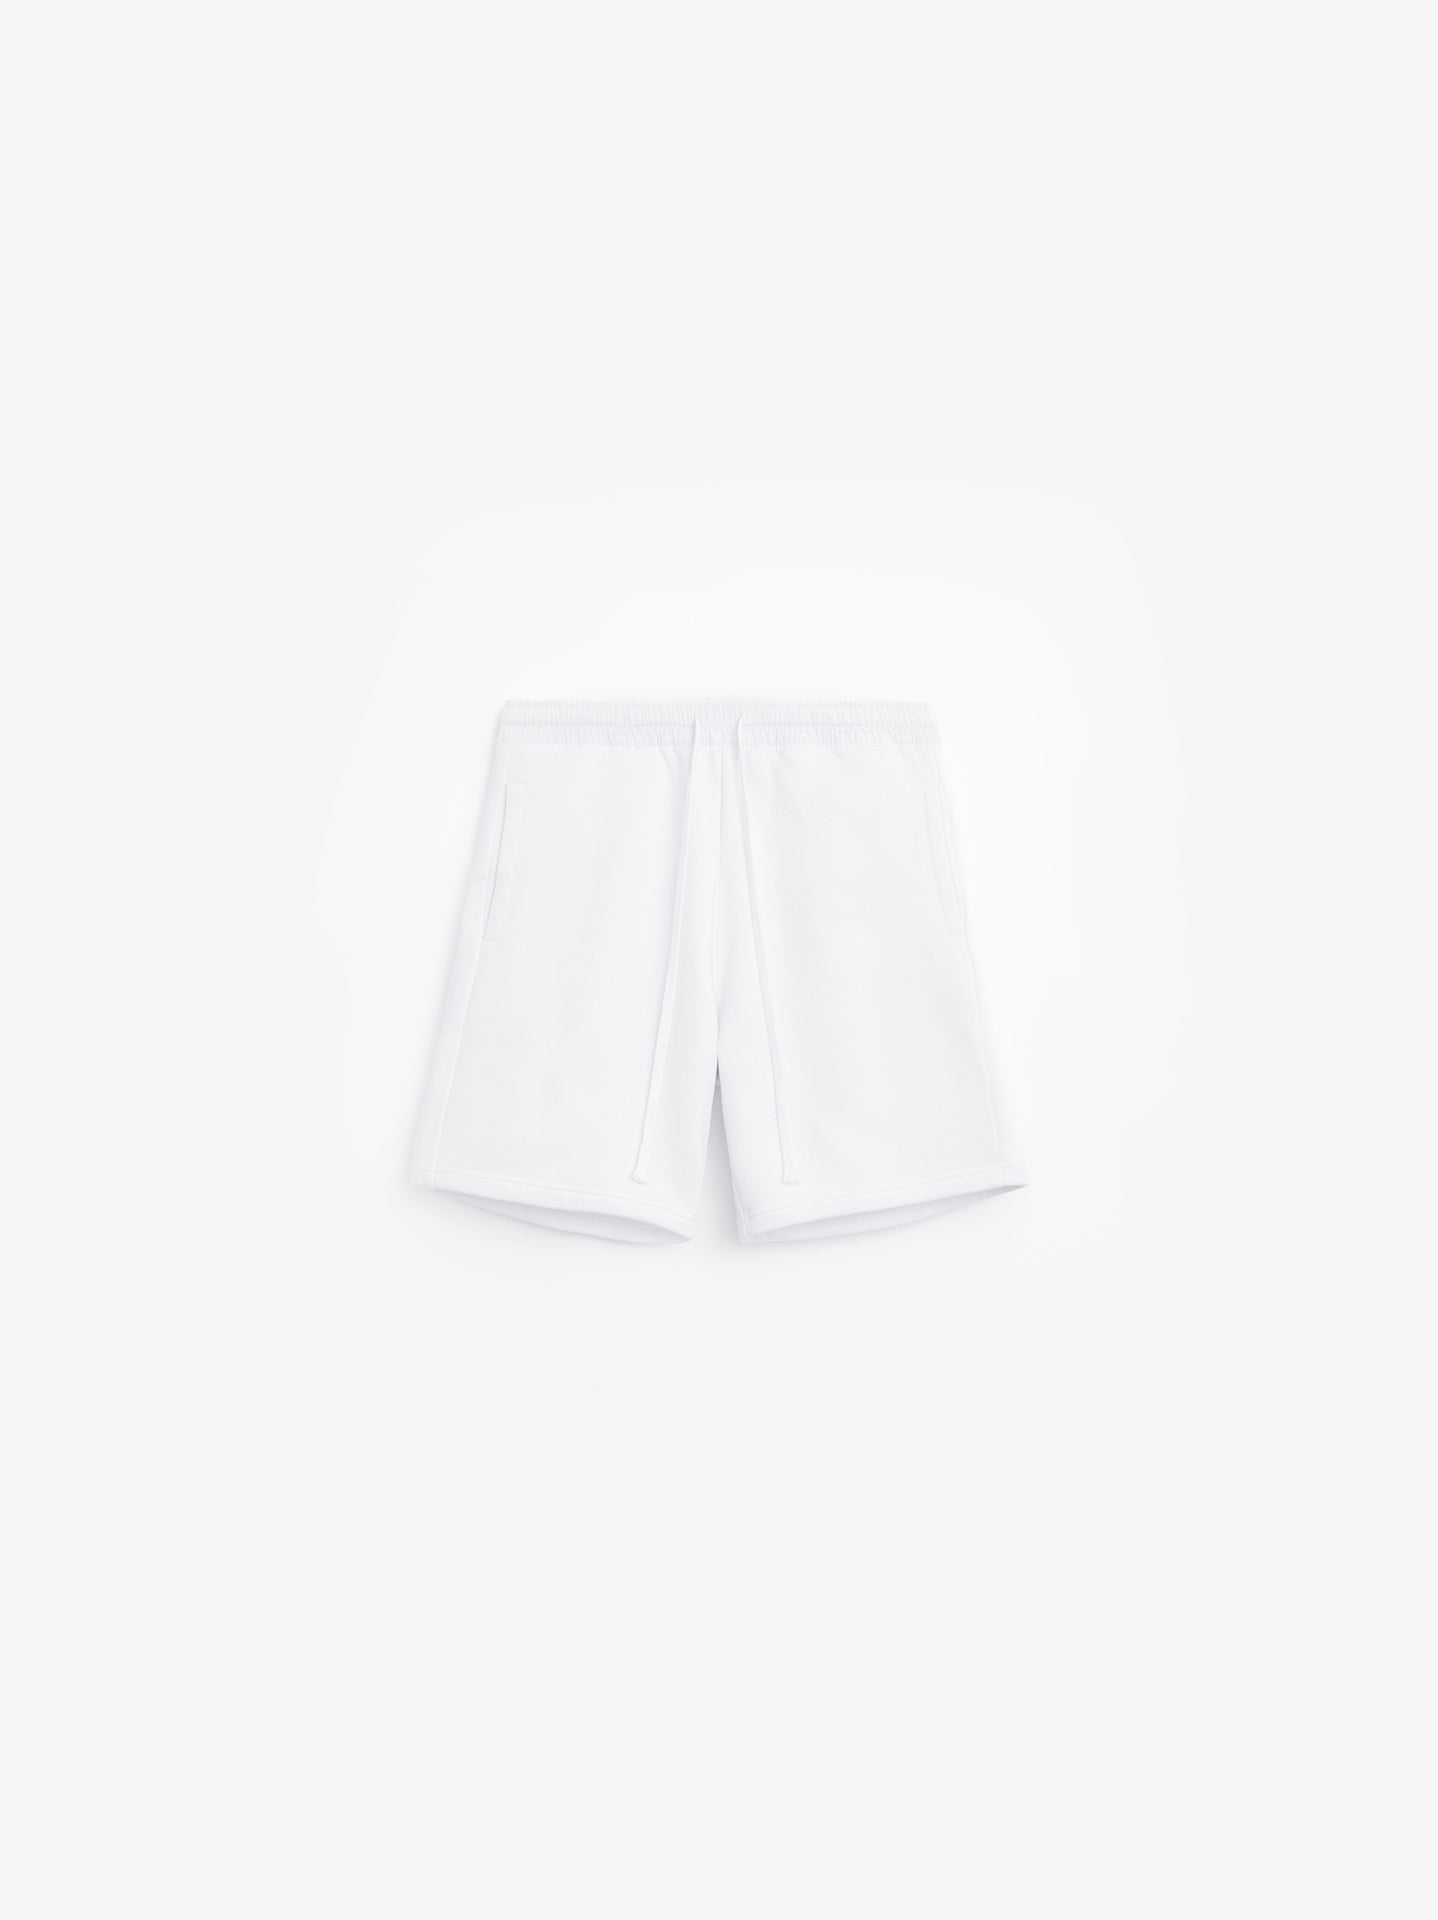 Logo Shorts - White